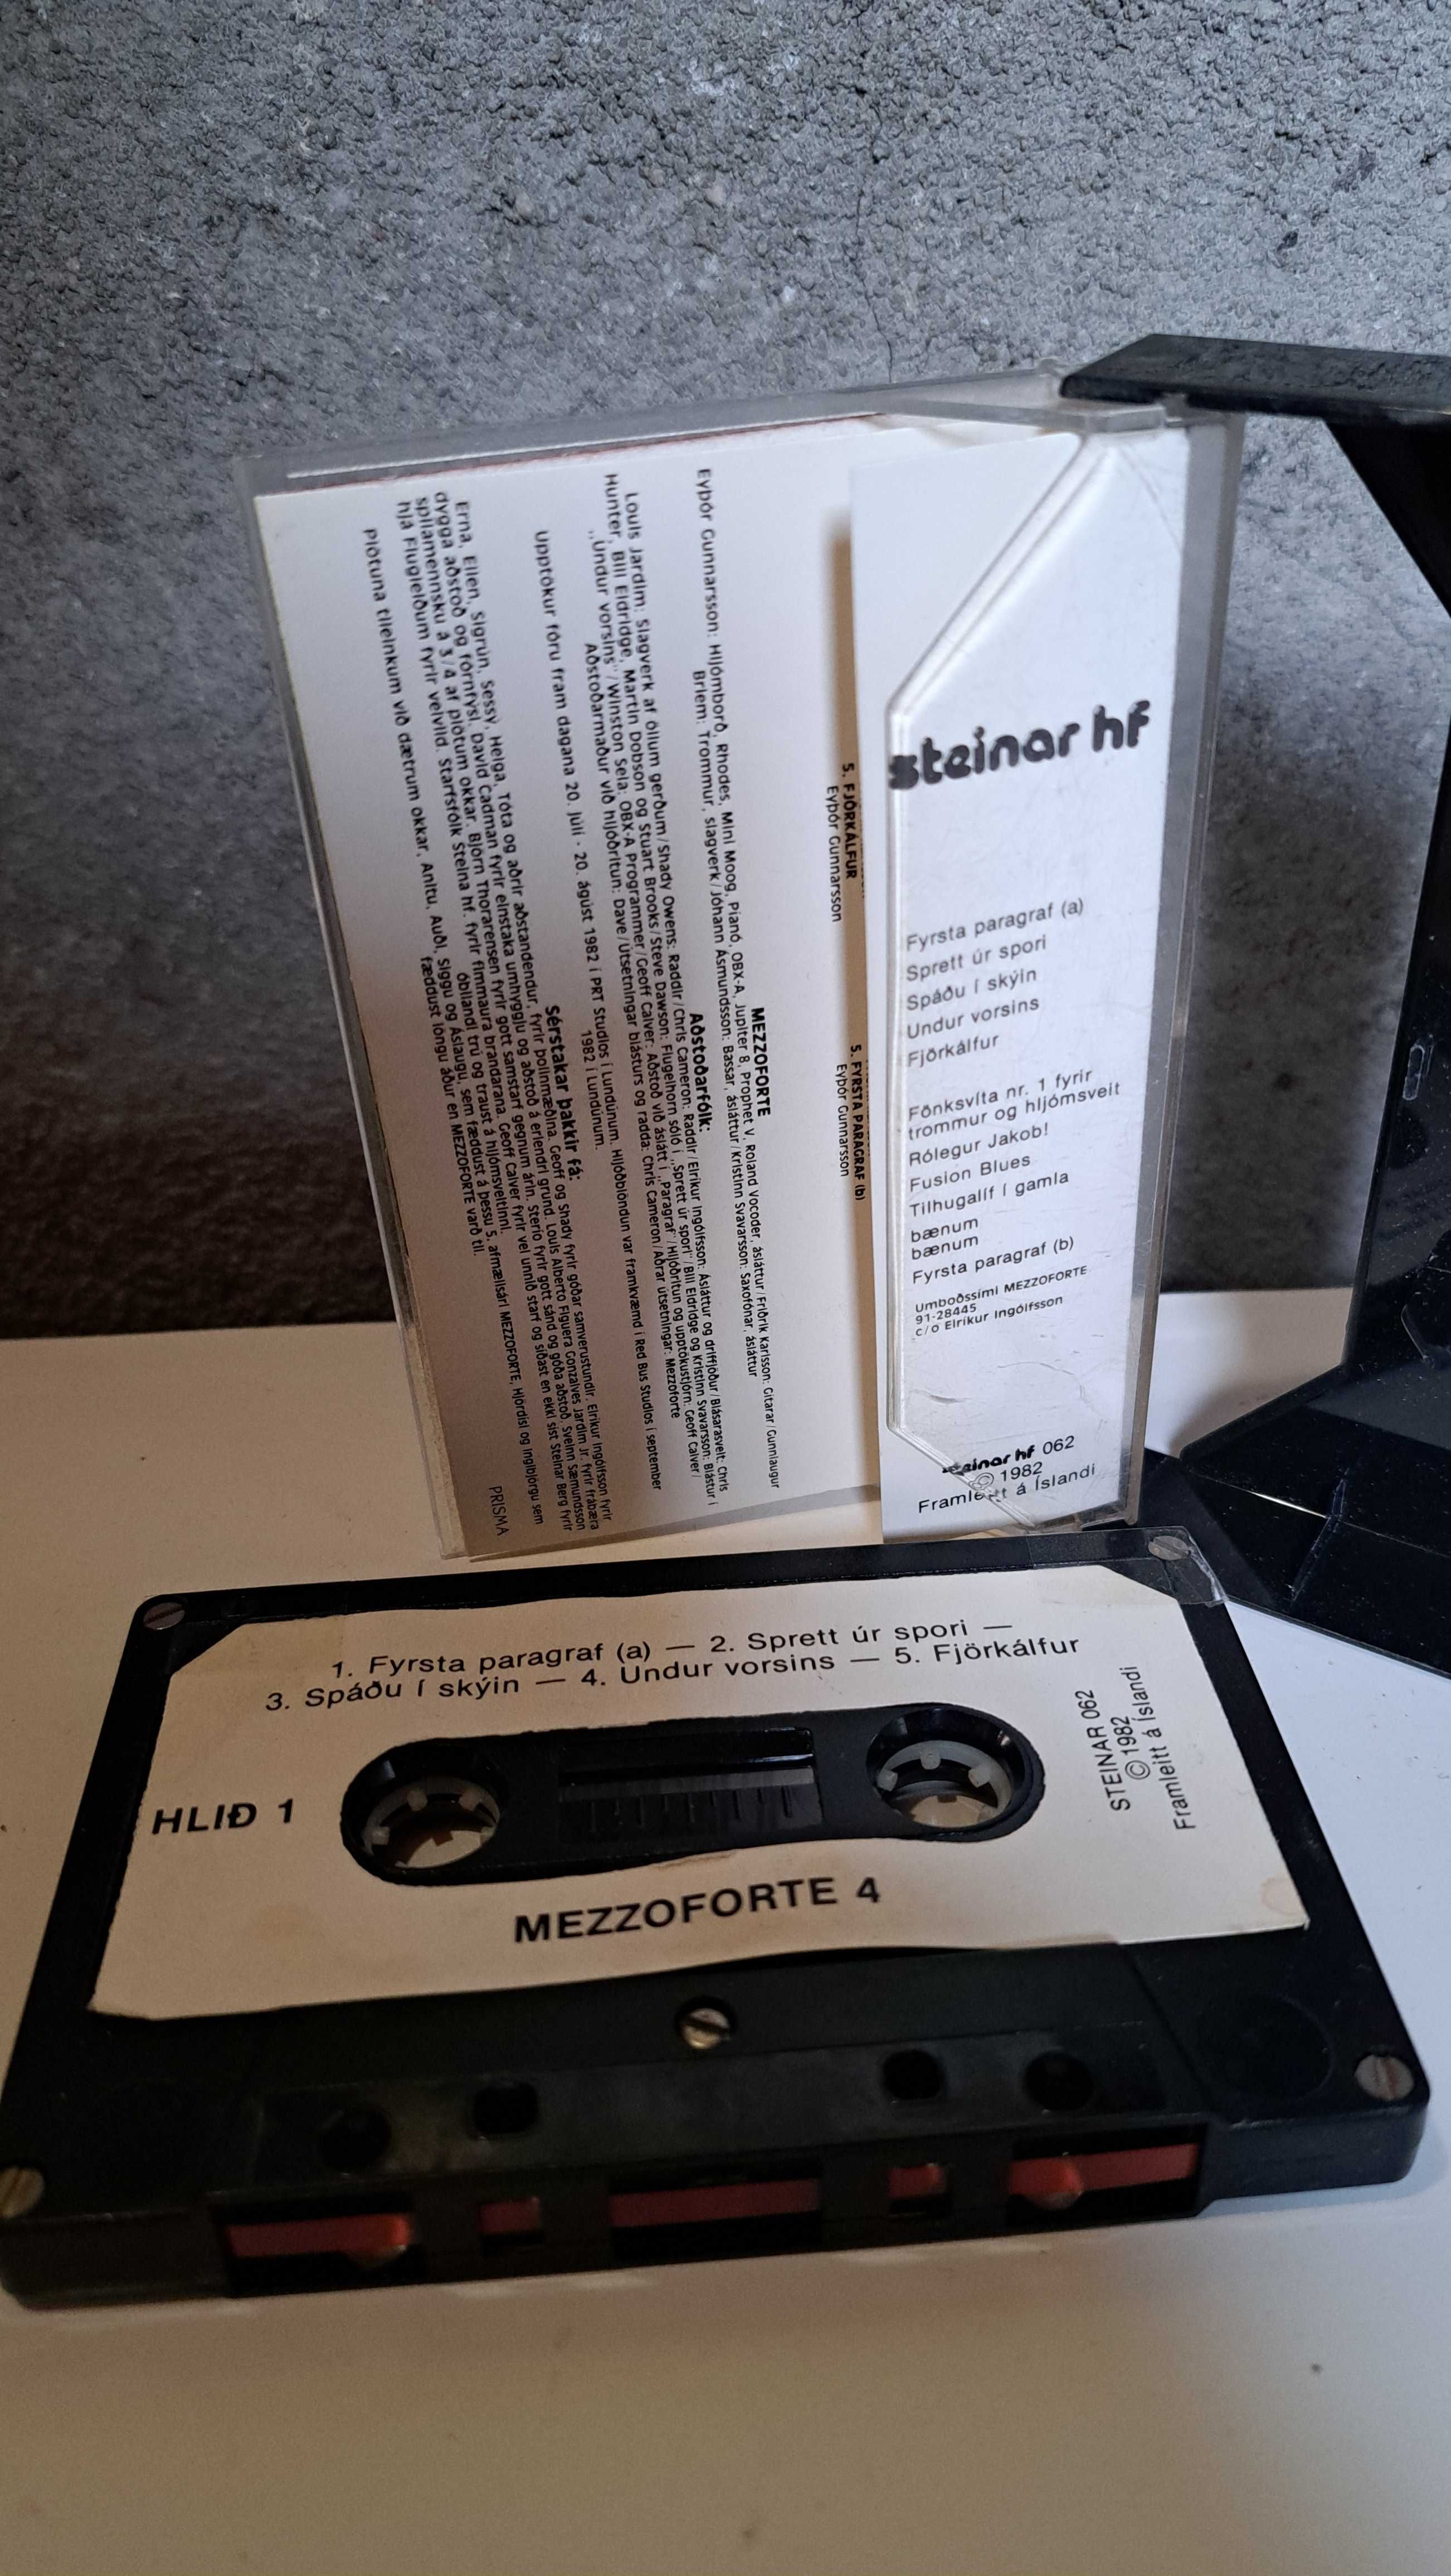 Mezzoforte 4 kaseta audio